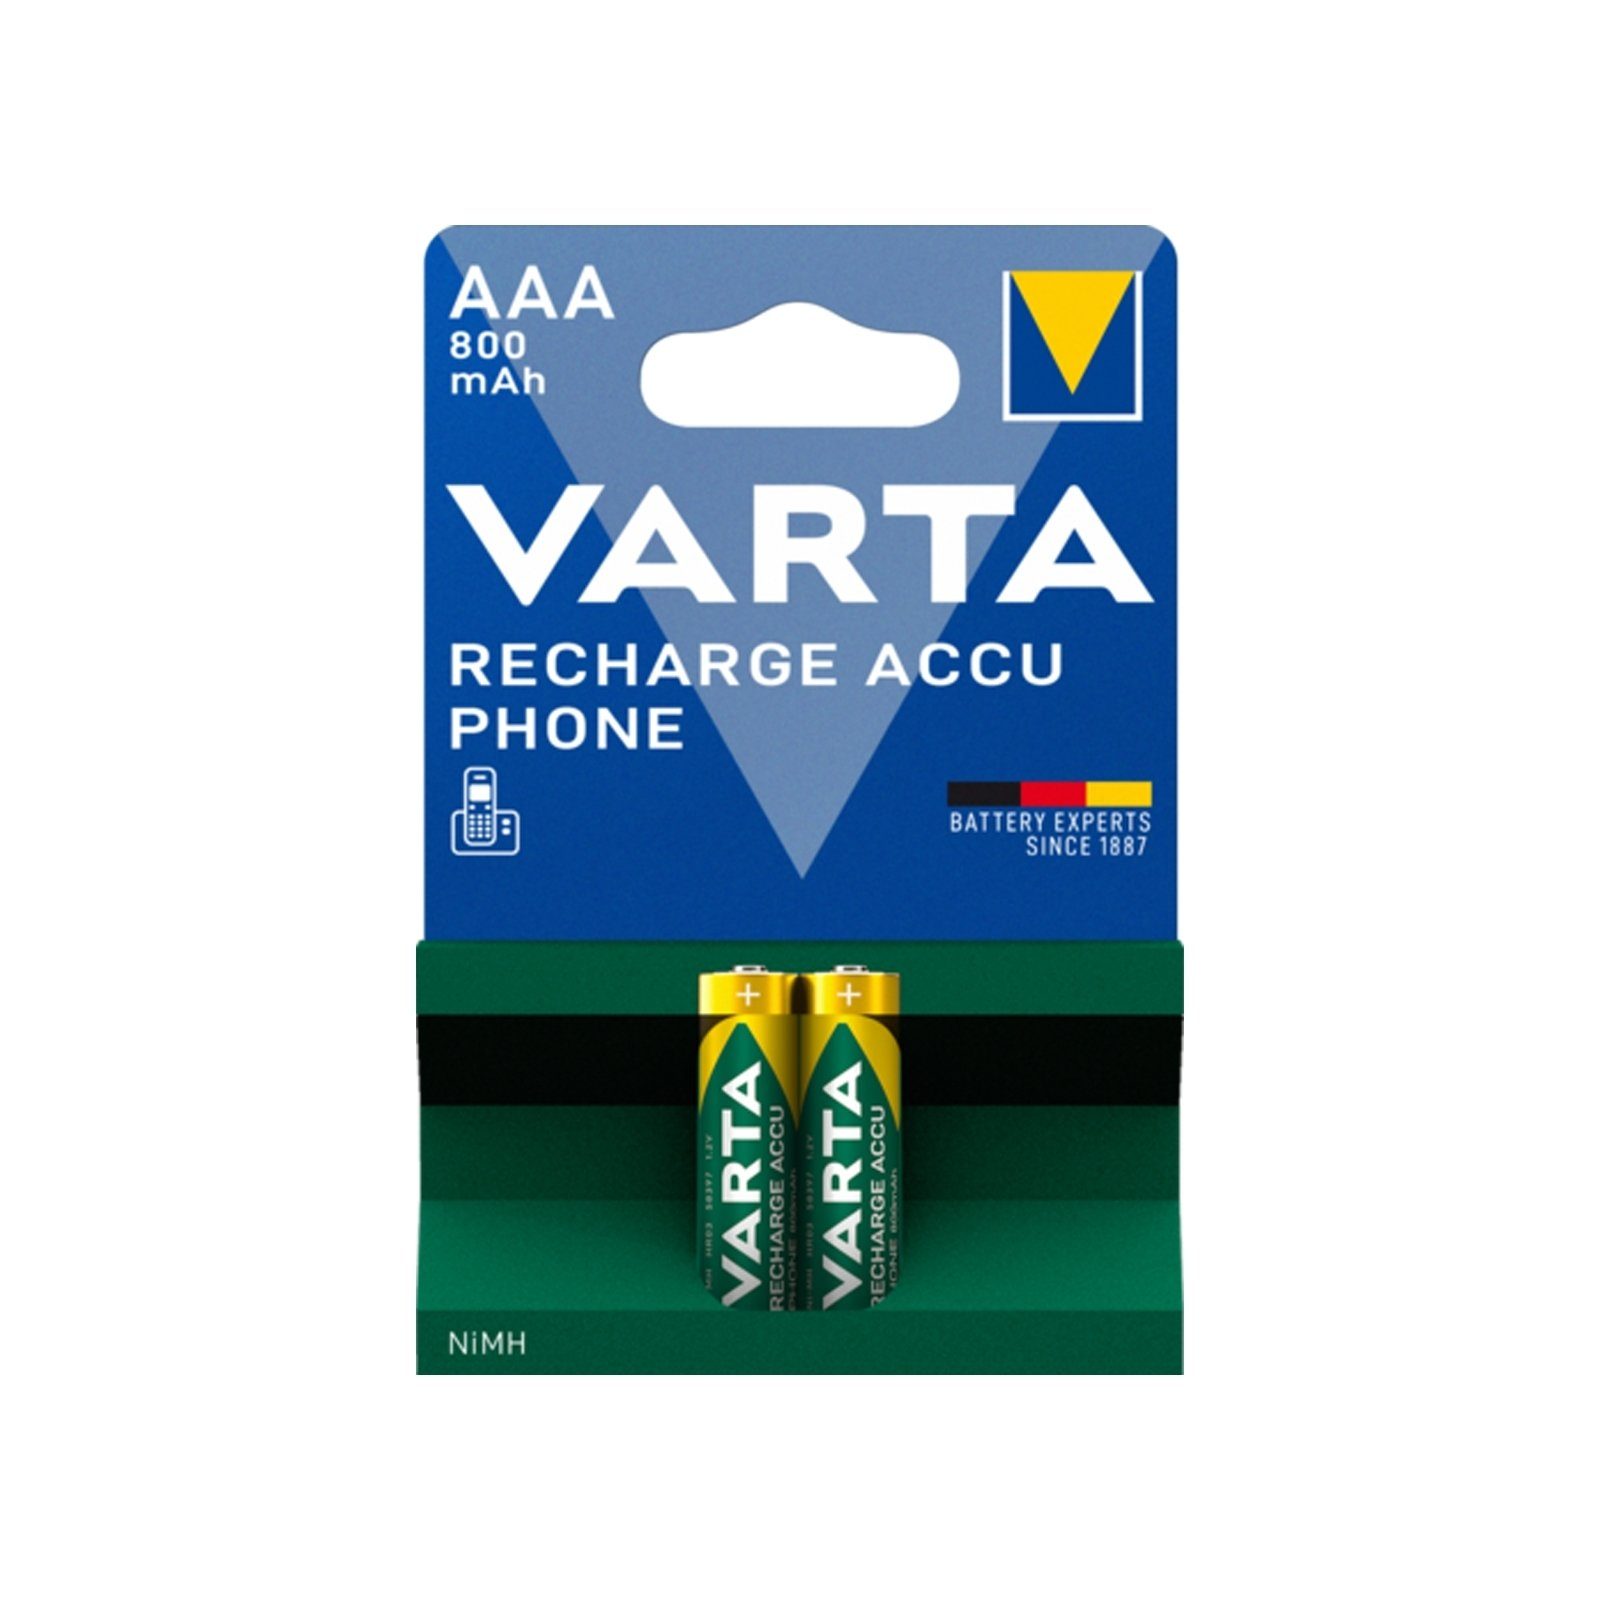 VARTA Recharge Accu Phone 2xAAA 800 mAh Batterie